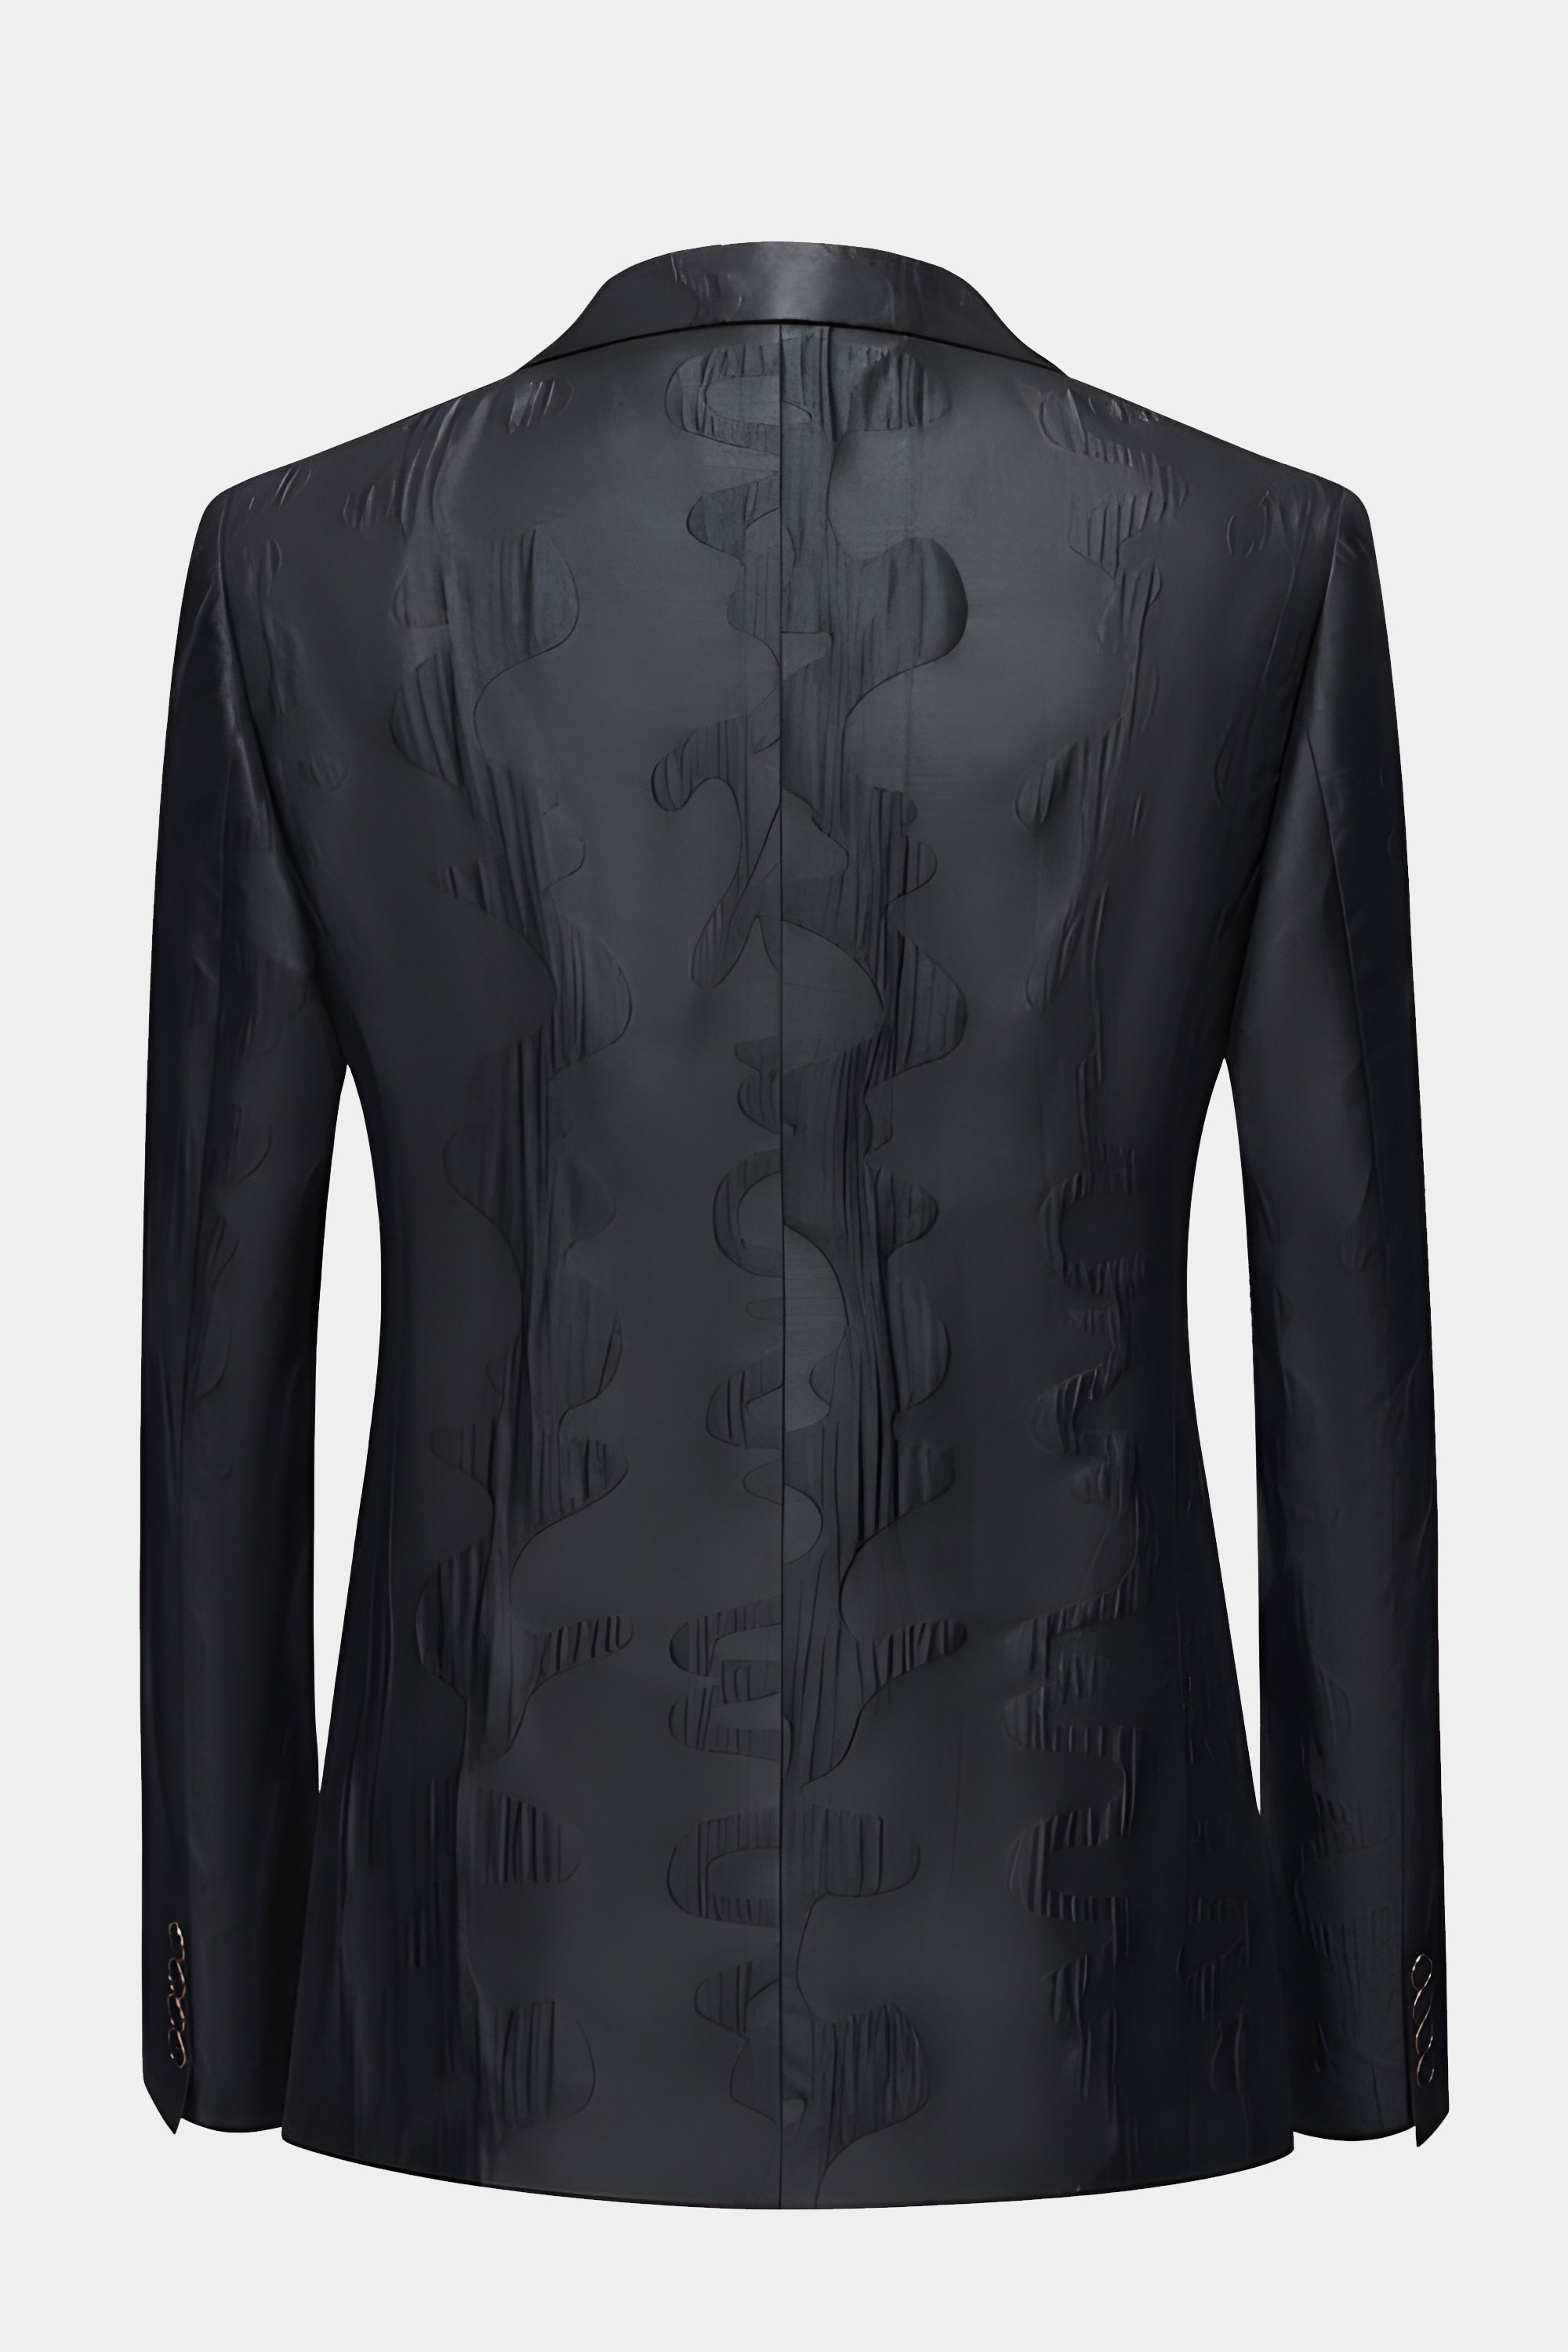 Black-Abstract-Tuxedo-Jacket-prom-Blazer-from-Gentlemansguru.com